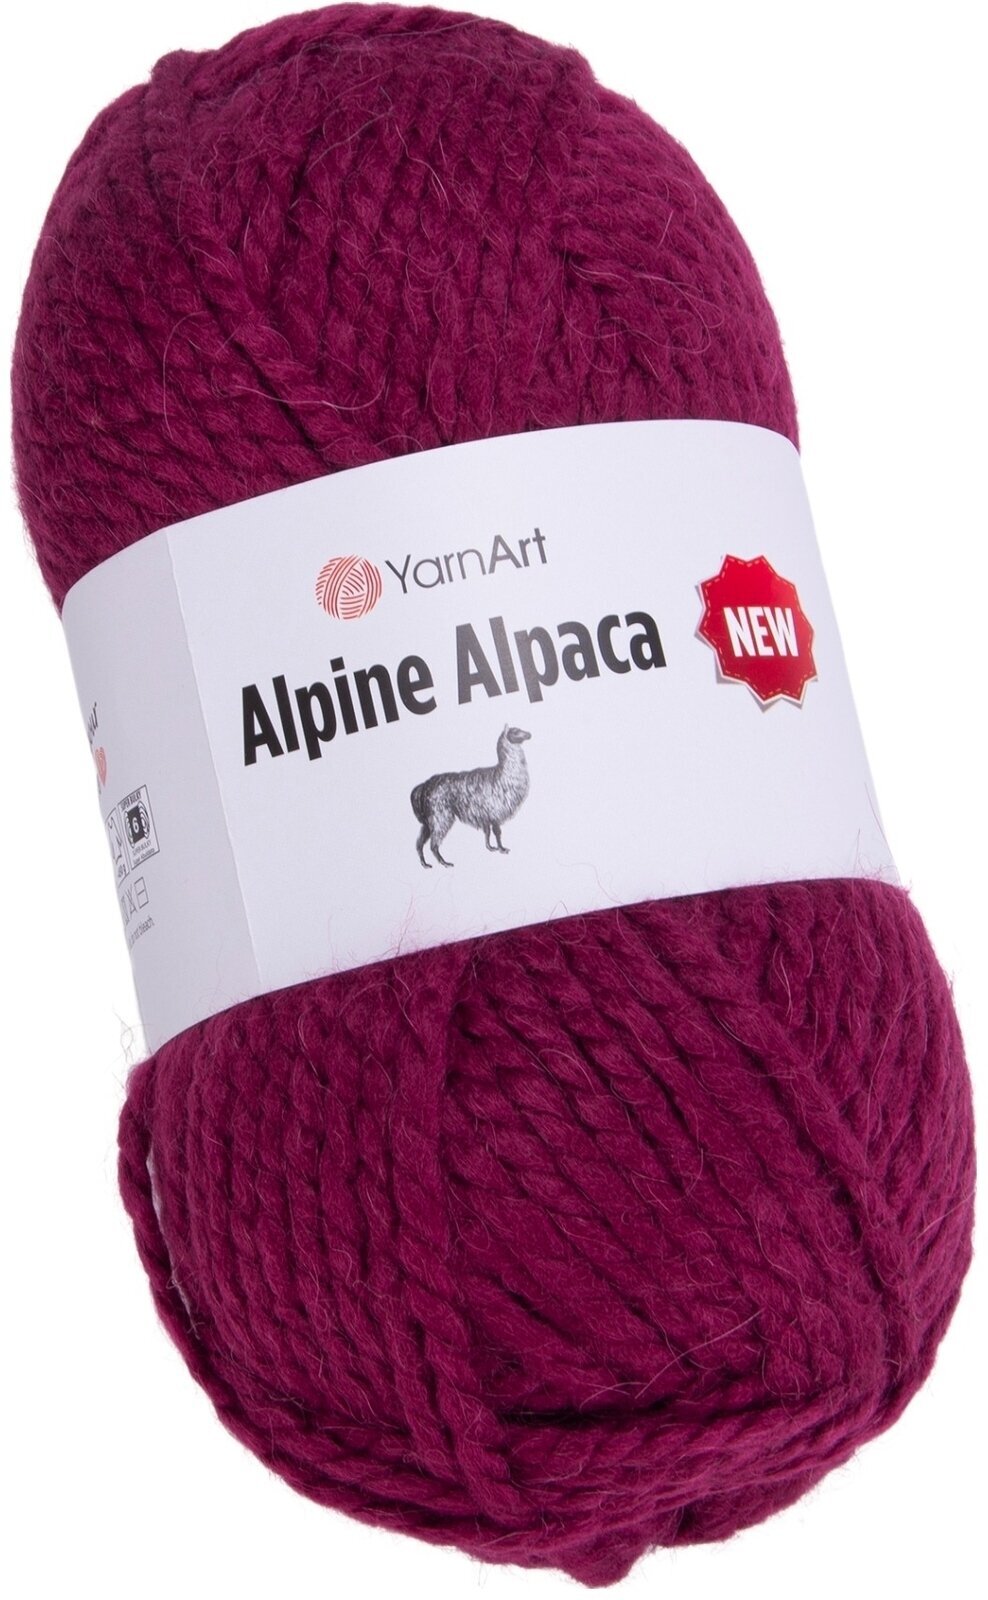 Knitting Yarn Yarn Art Alpine Alpaca Knitting Yarn 1441